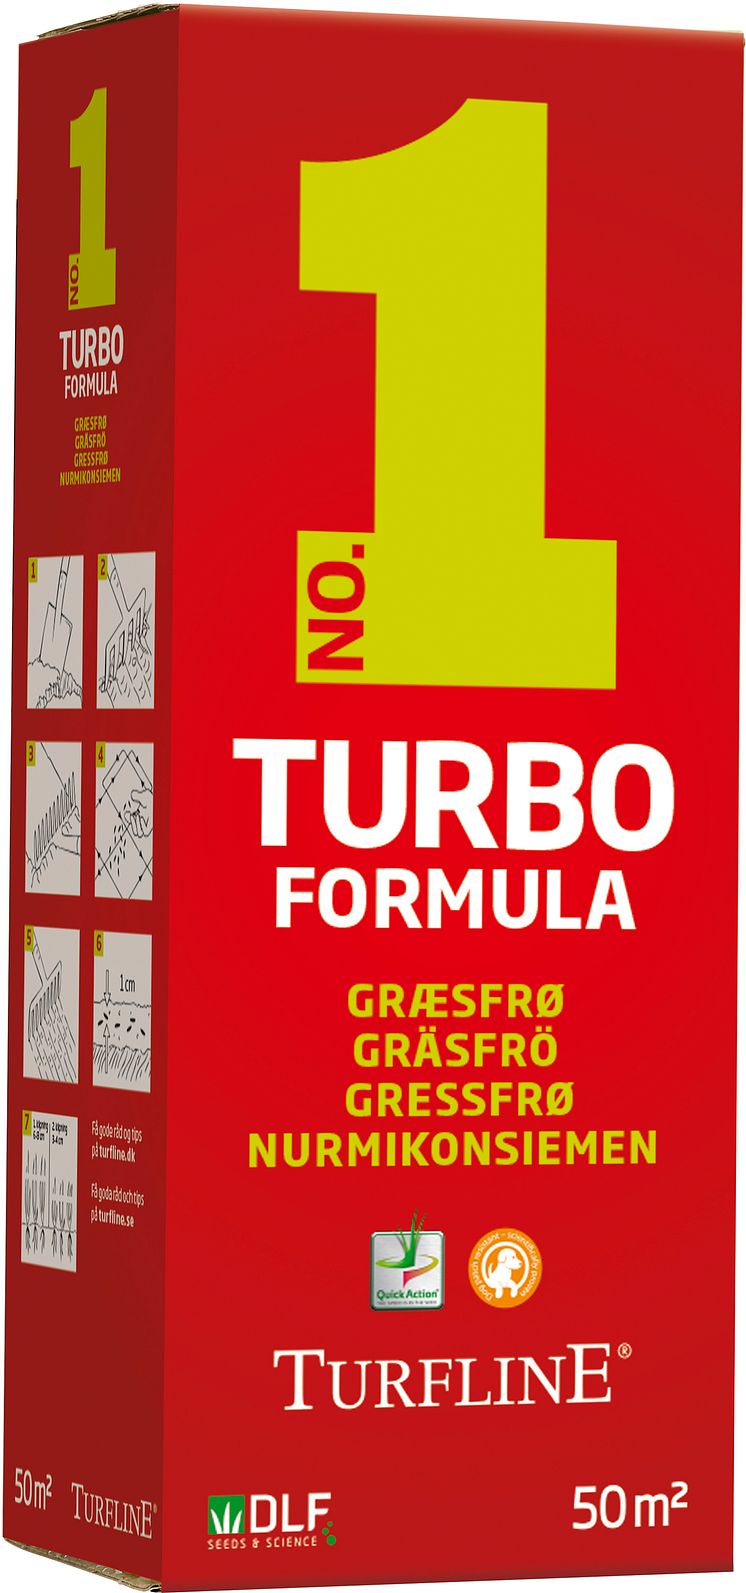 Turfline Turbo No 1